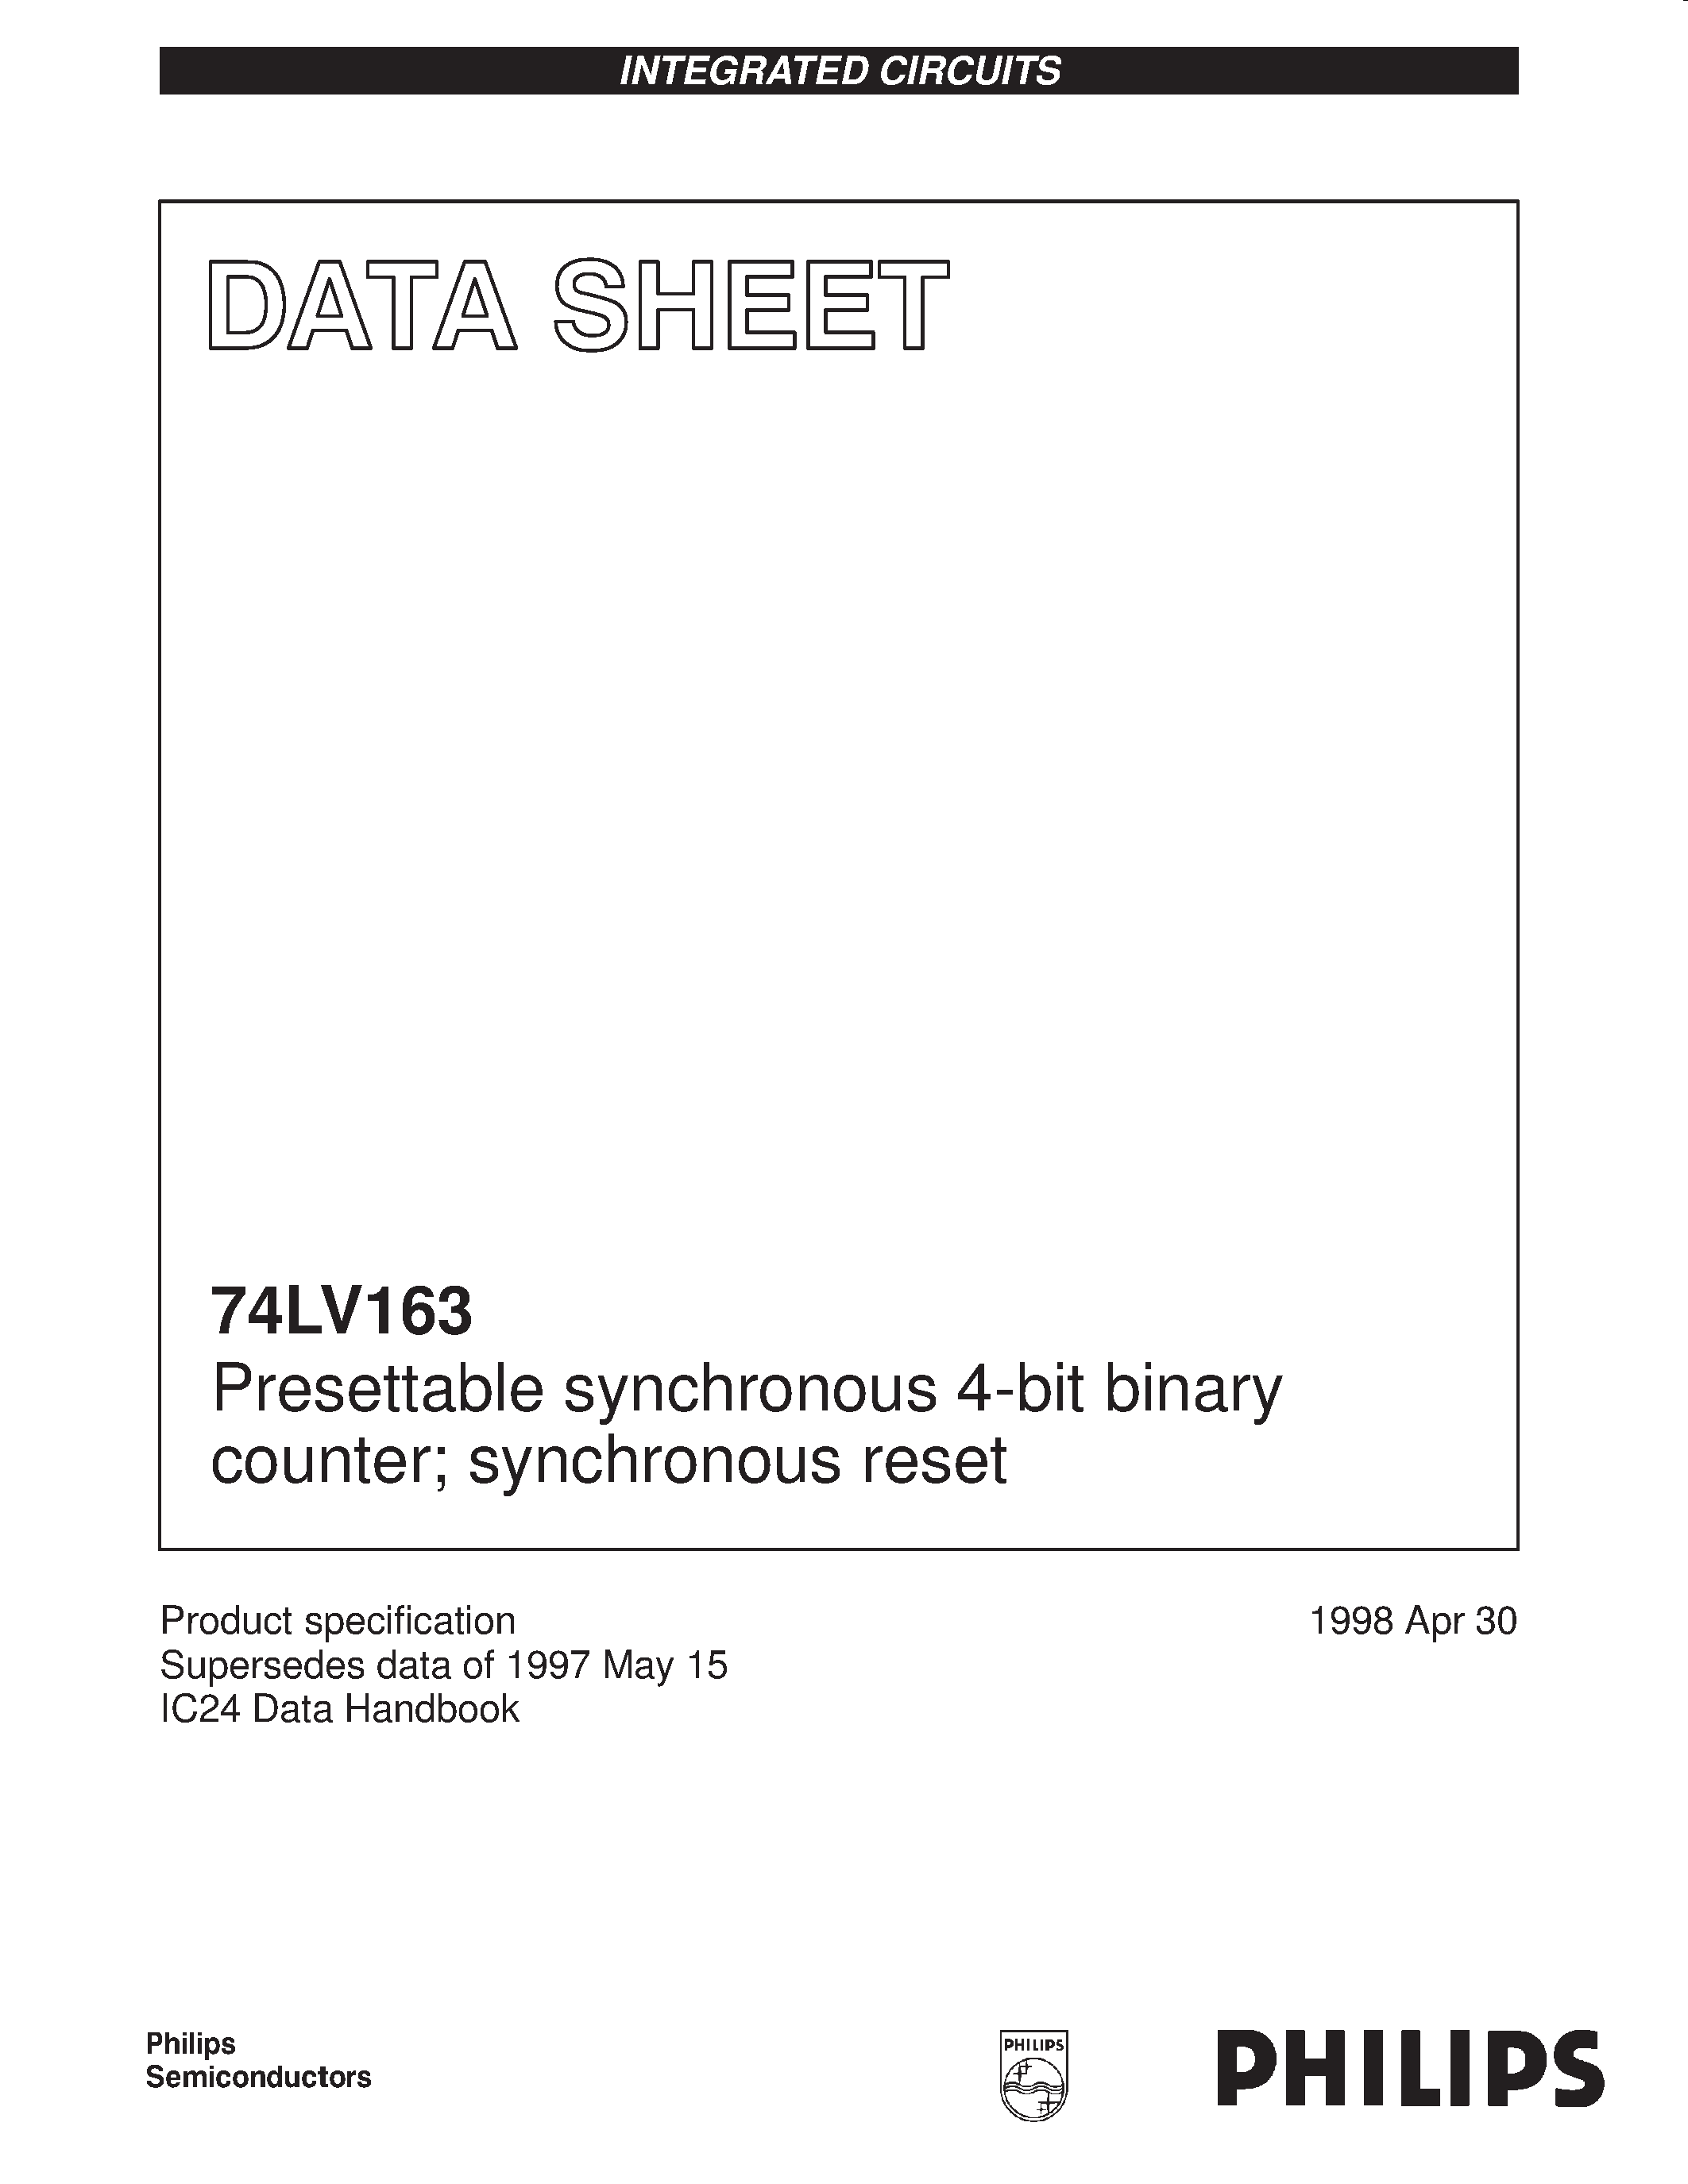 Даташит 74LV163 - Presettable synchronous 4-bit binary counter; synchronous reset страница 1